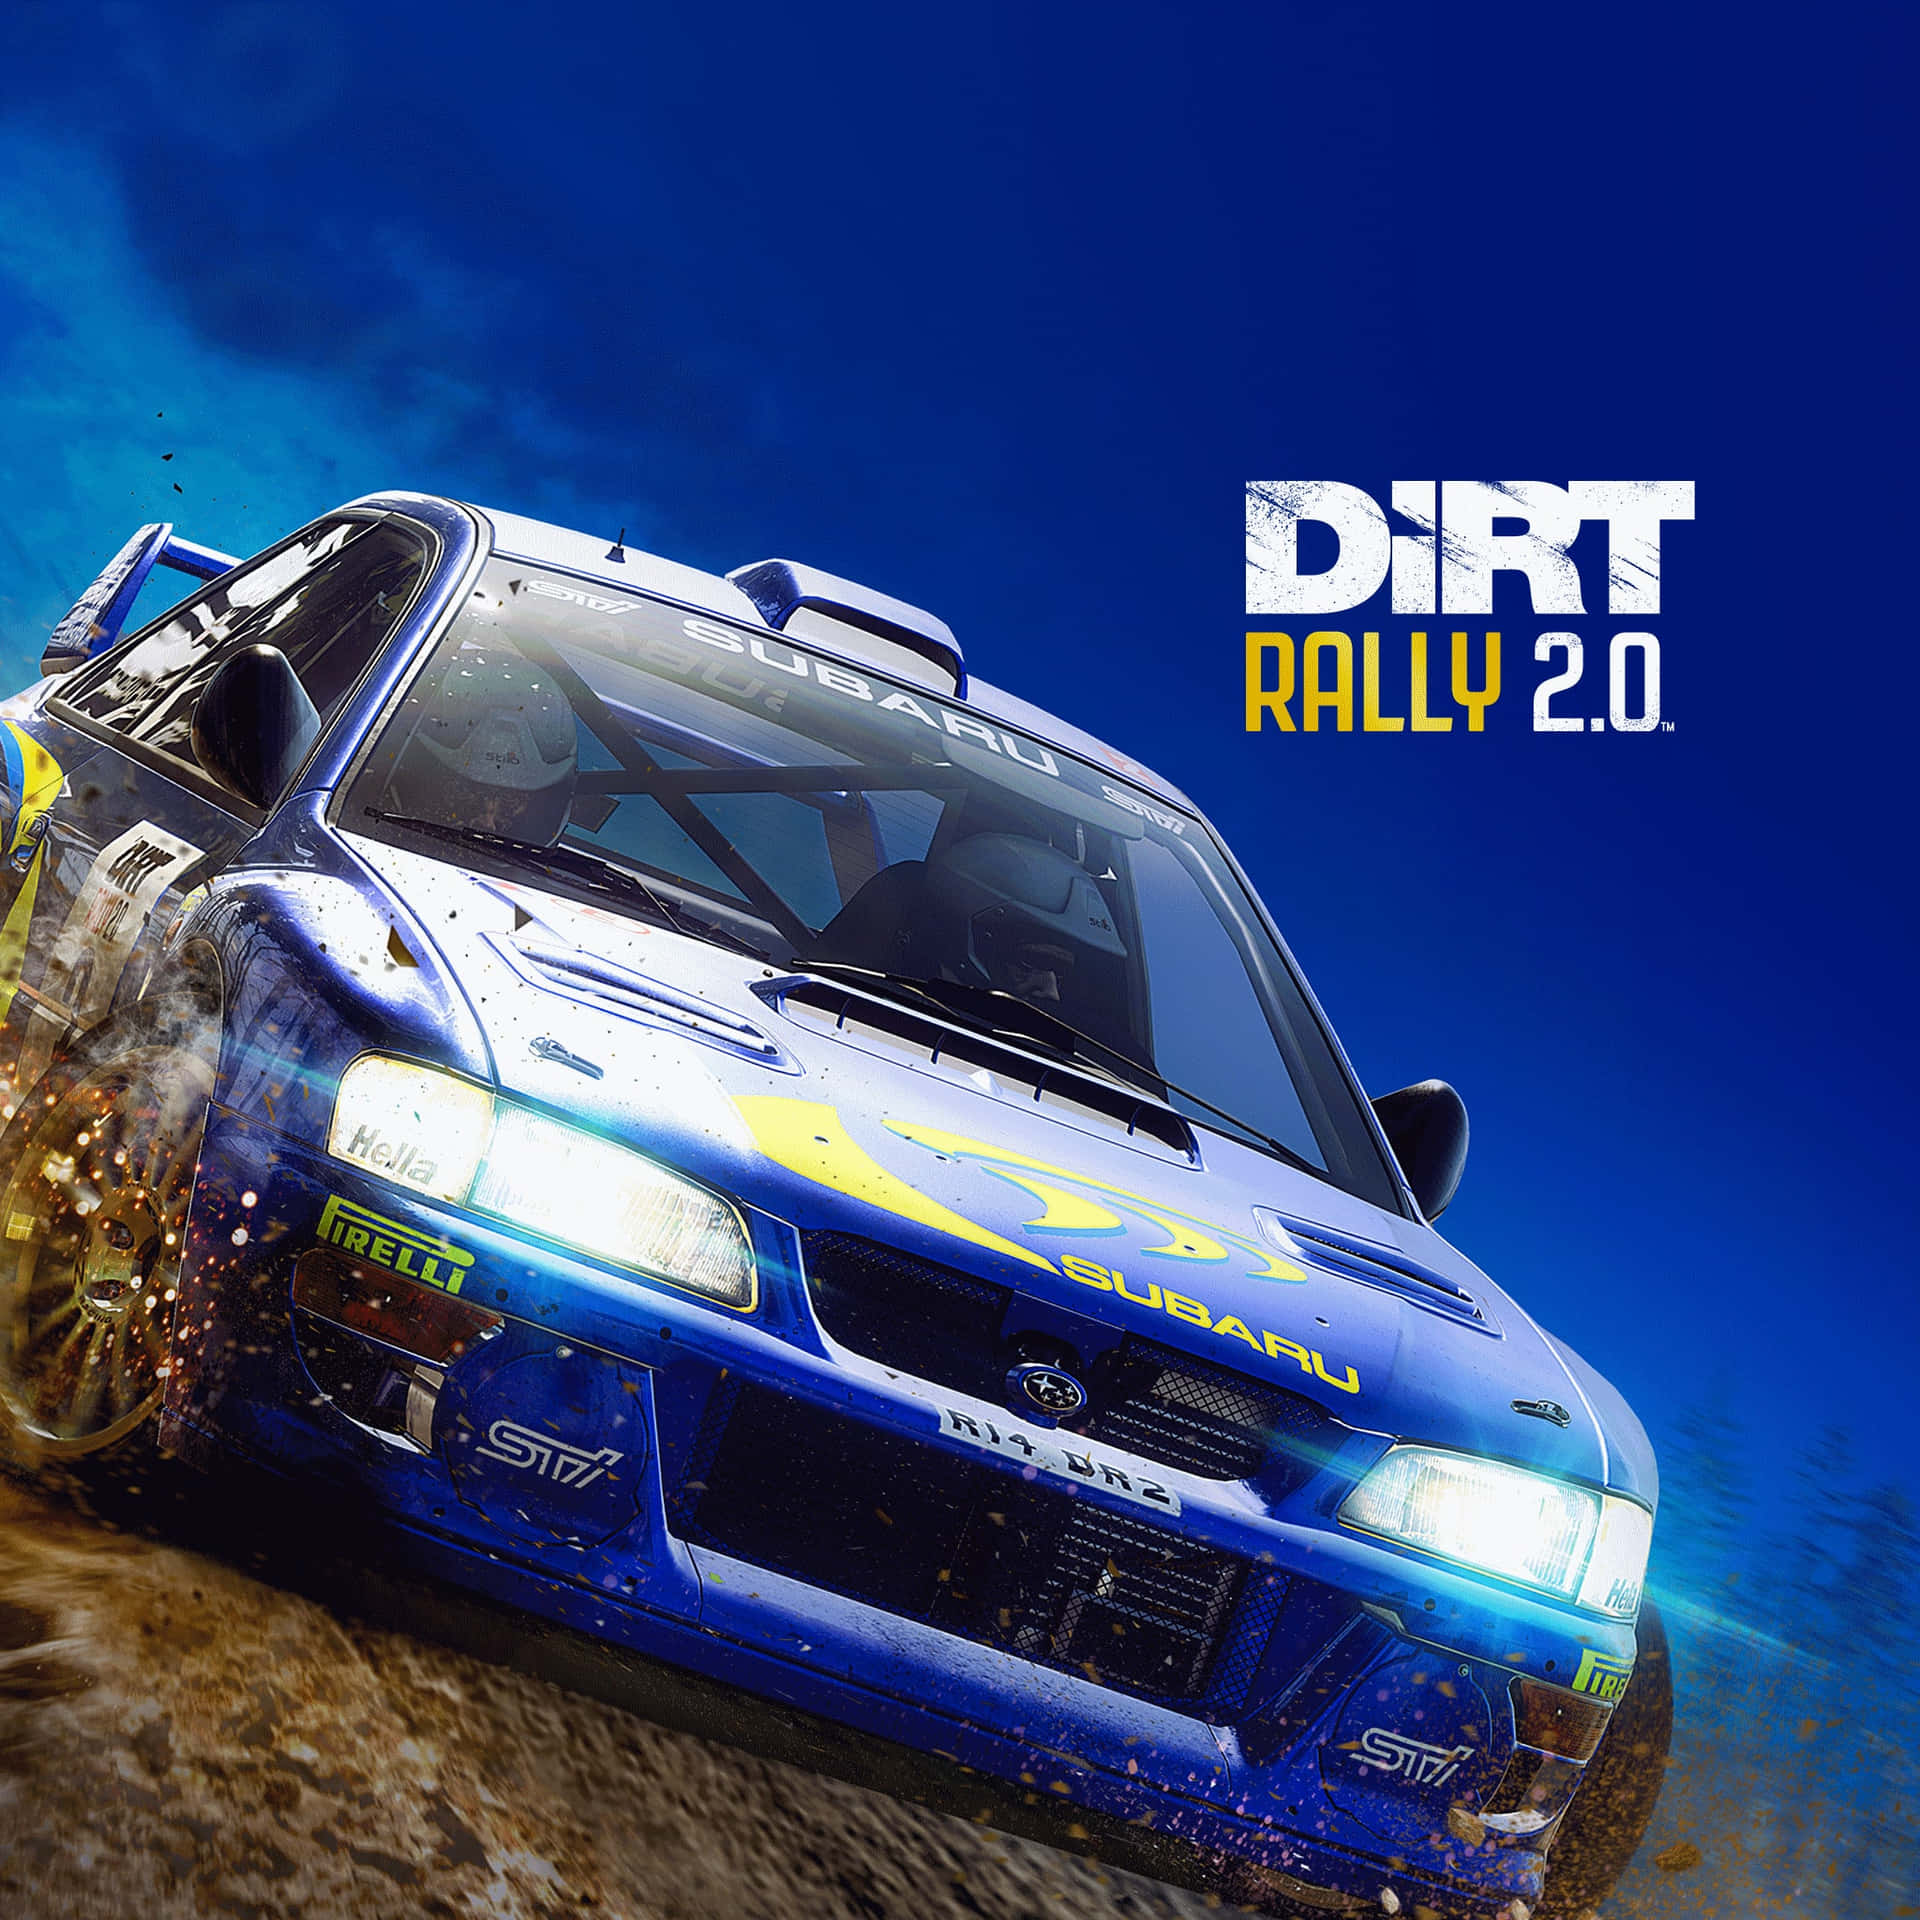 Subaru Best Dirt Rally Background